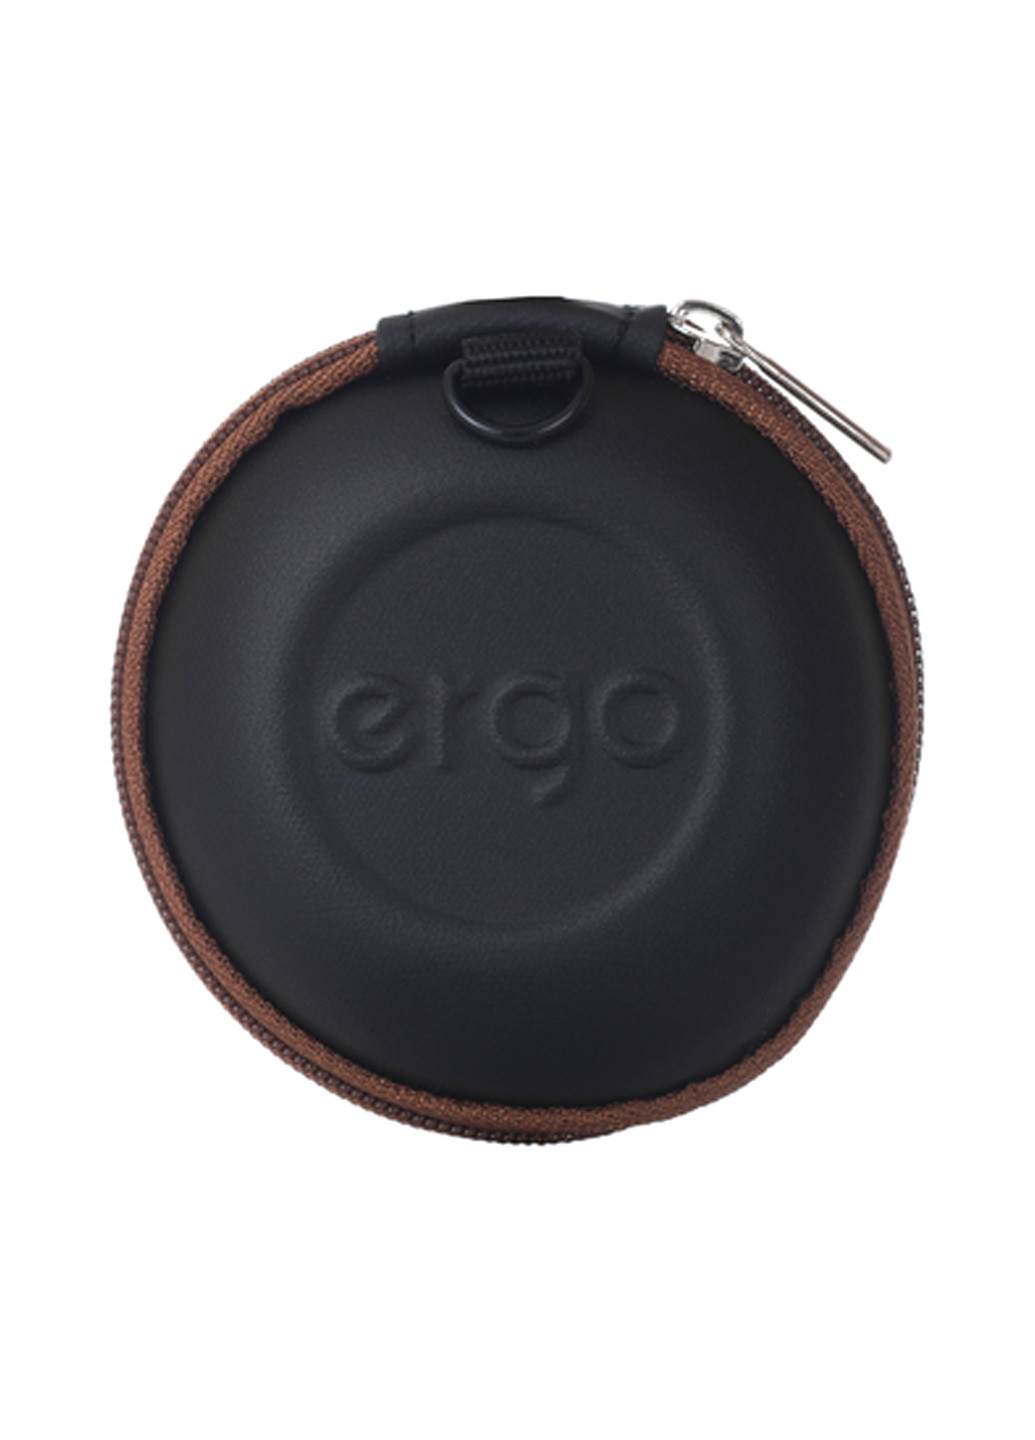 Наушники Ergo es-200 bronze (135029100)